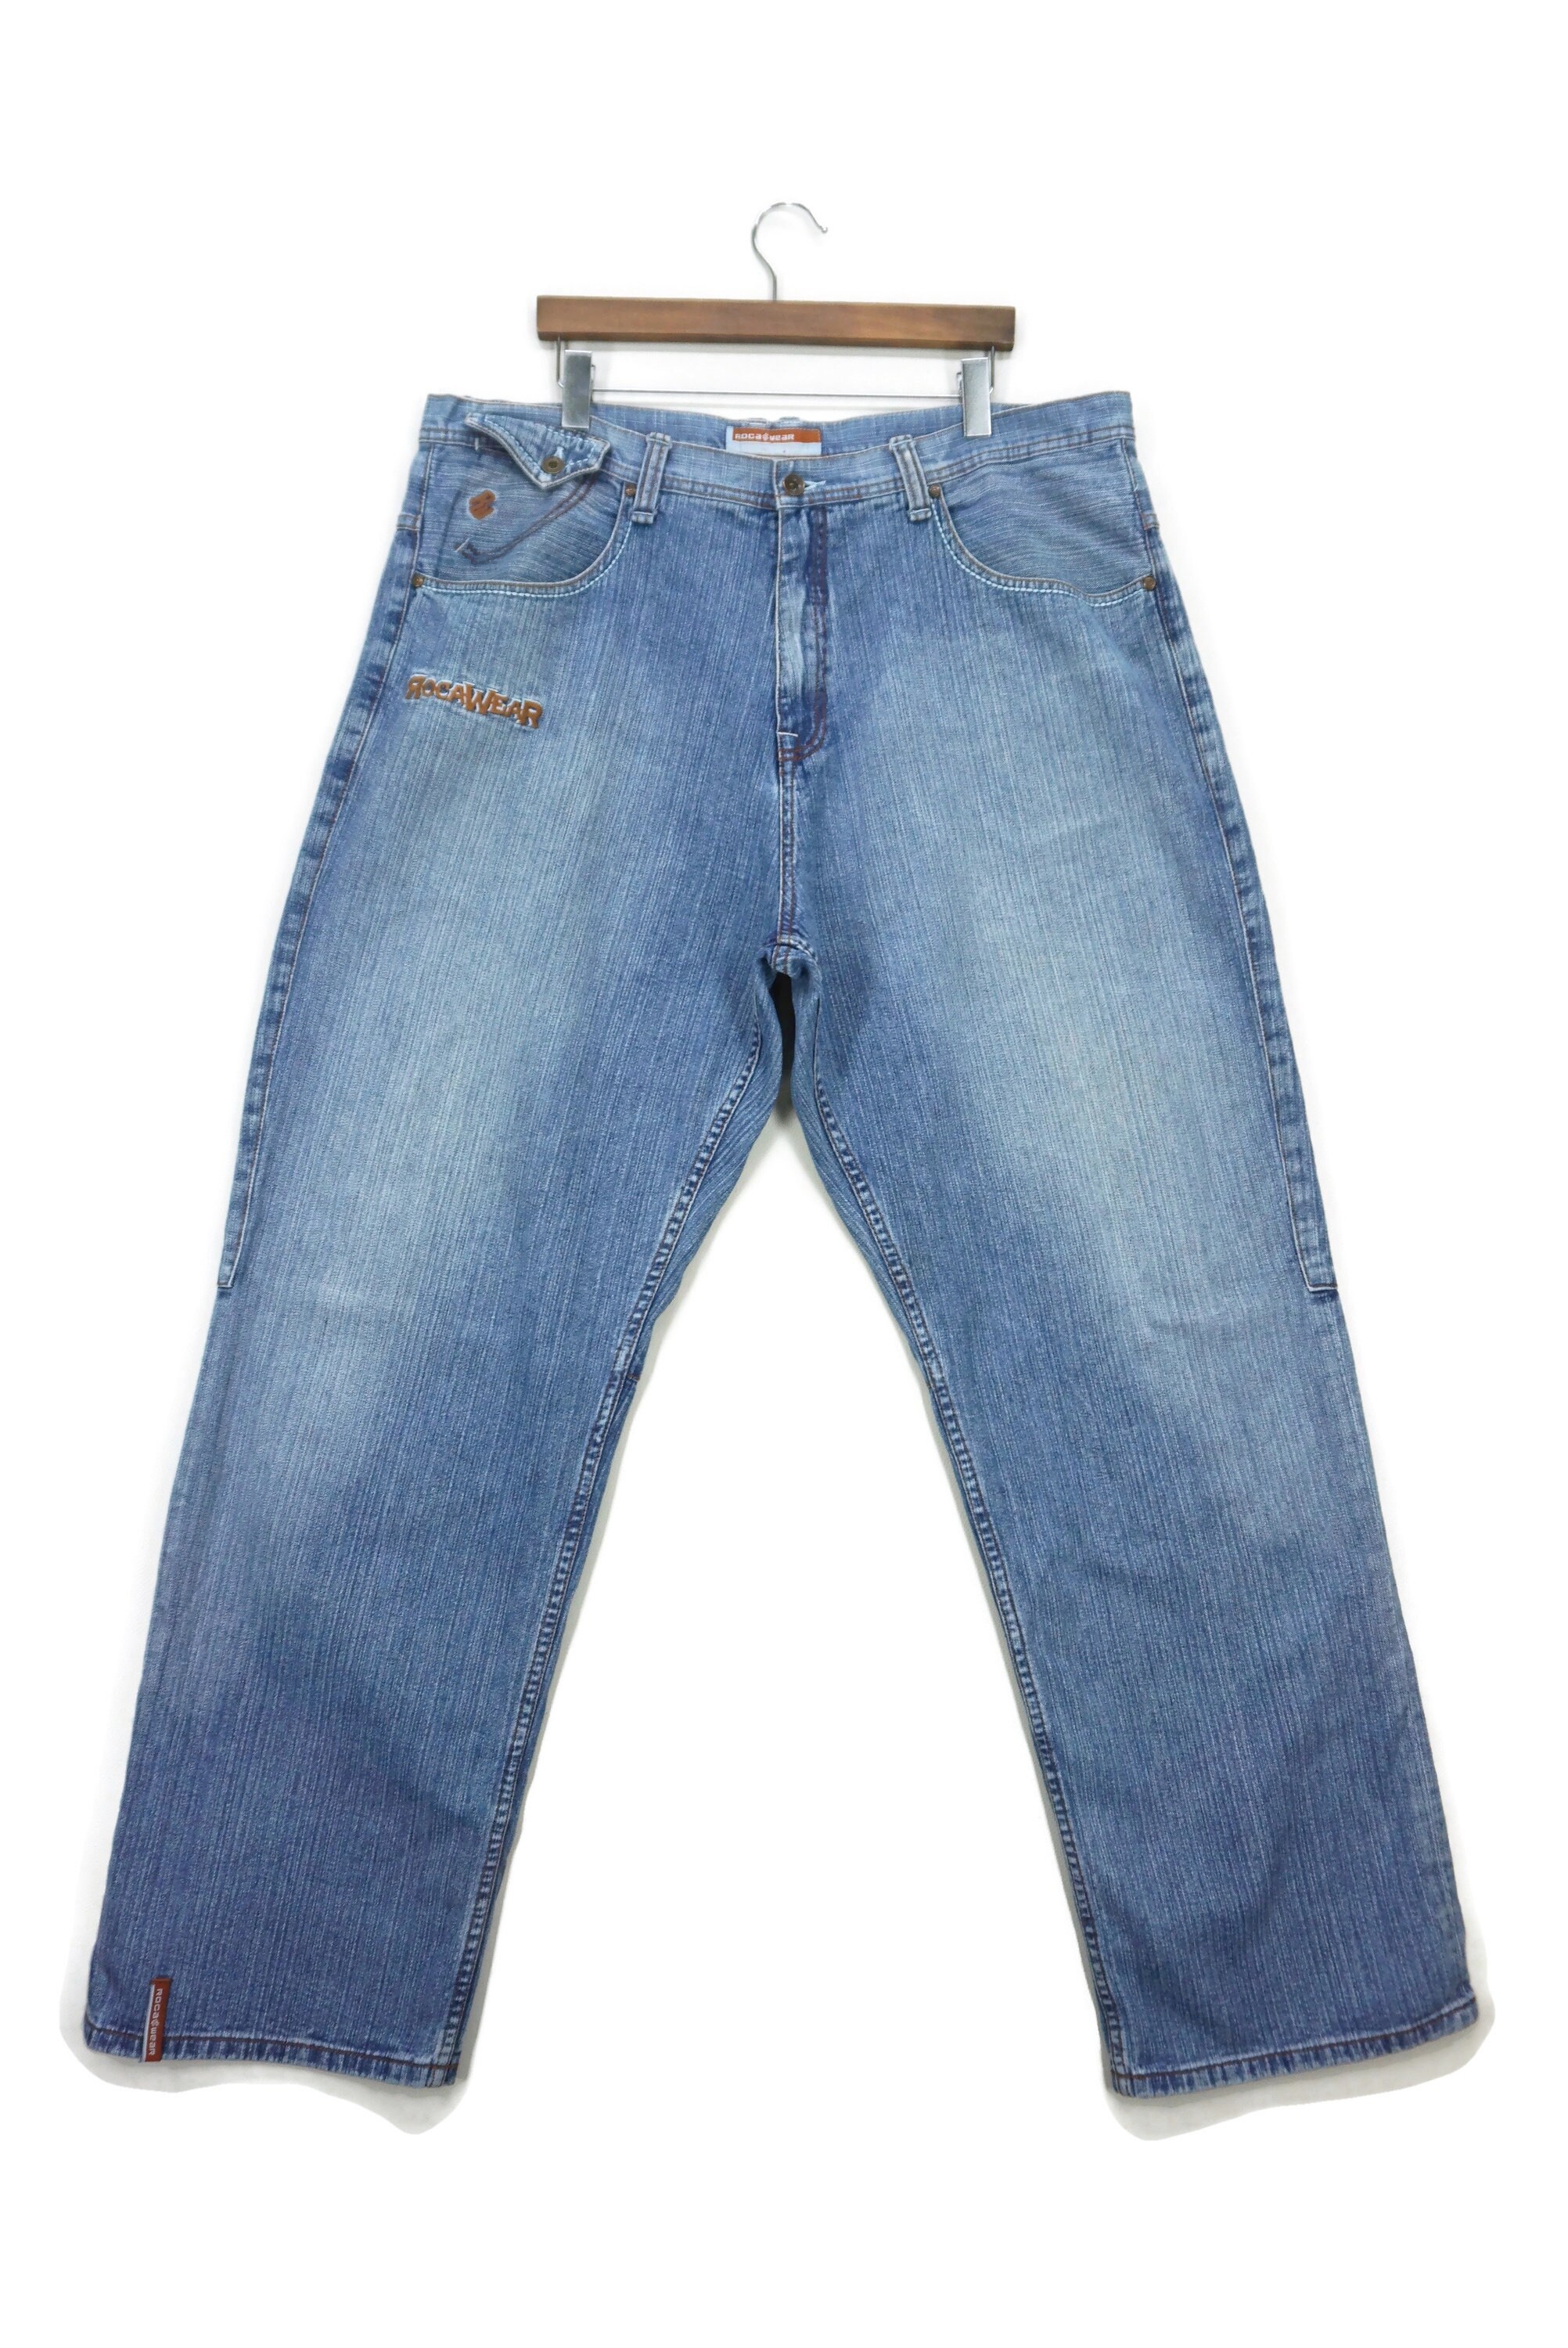 Rocawear Jeans Size 42 W42xl34 Rocawear Baggy Denim - Etsy